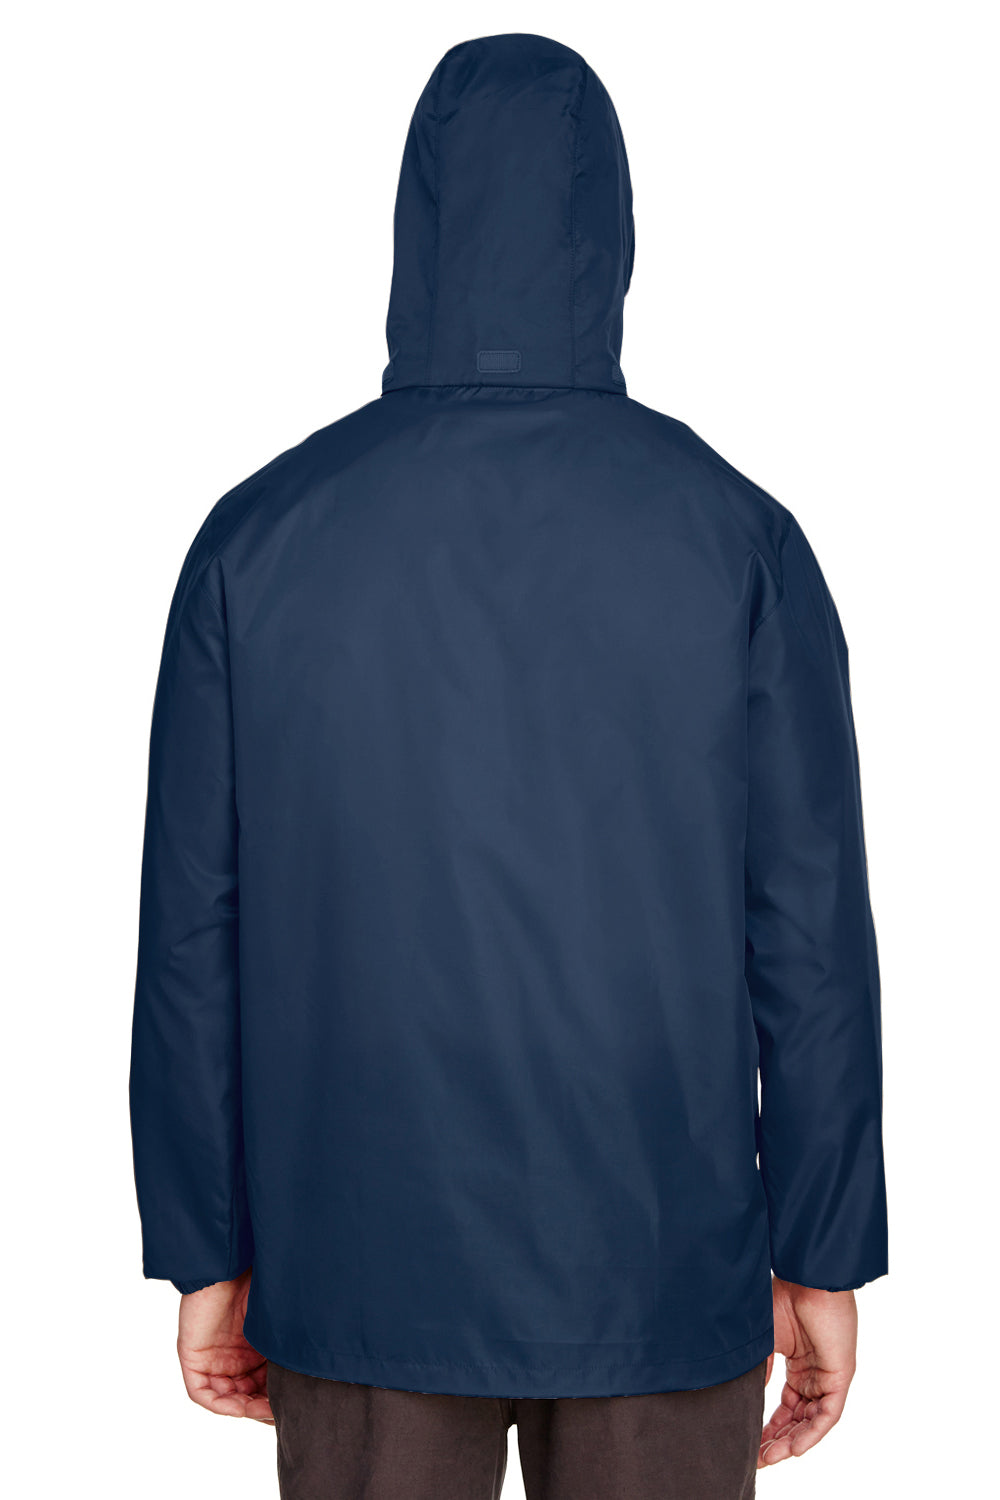 Team 365 TT73 Mens Zone Protect Water Resistant Full Zip Hooded Jacket Navy Blue Back